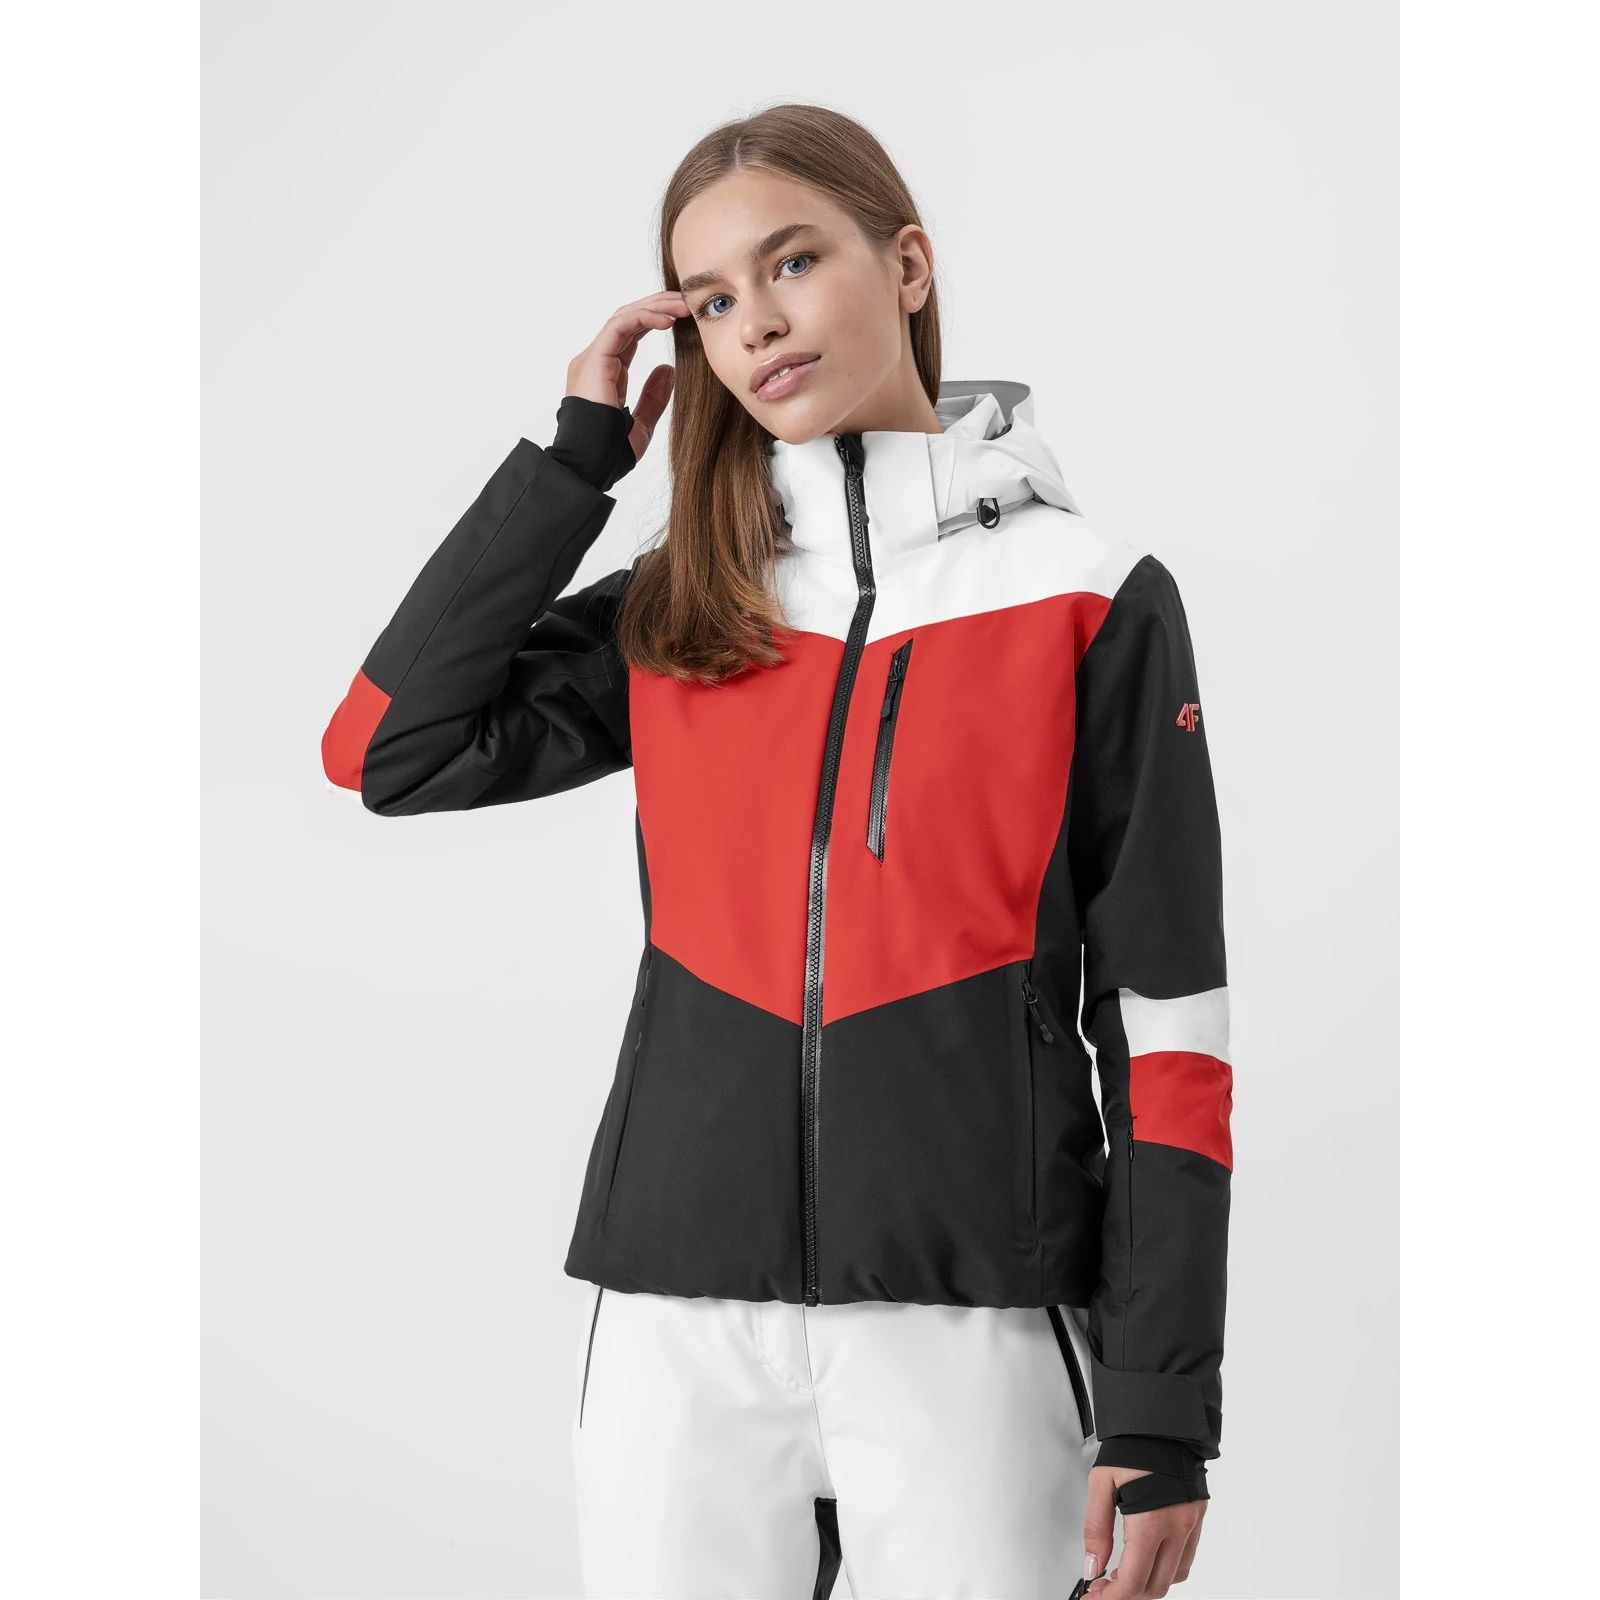 Geci Ski & Snow -  4f Women ski jacket KUDN009